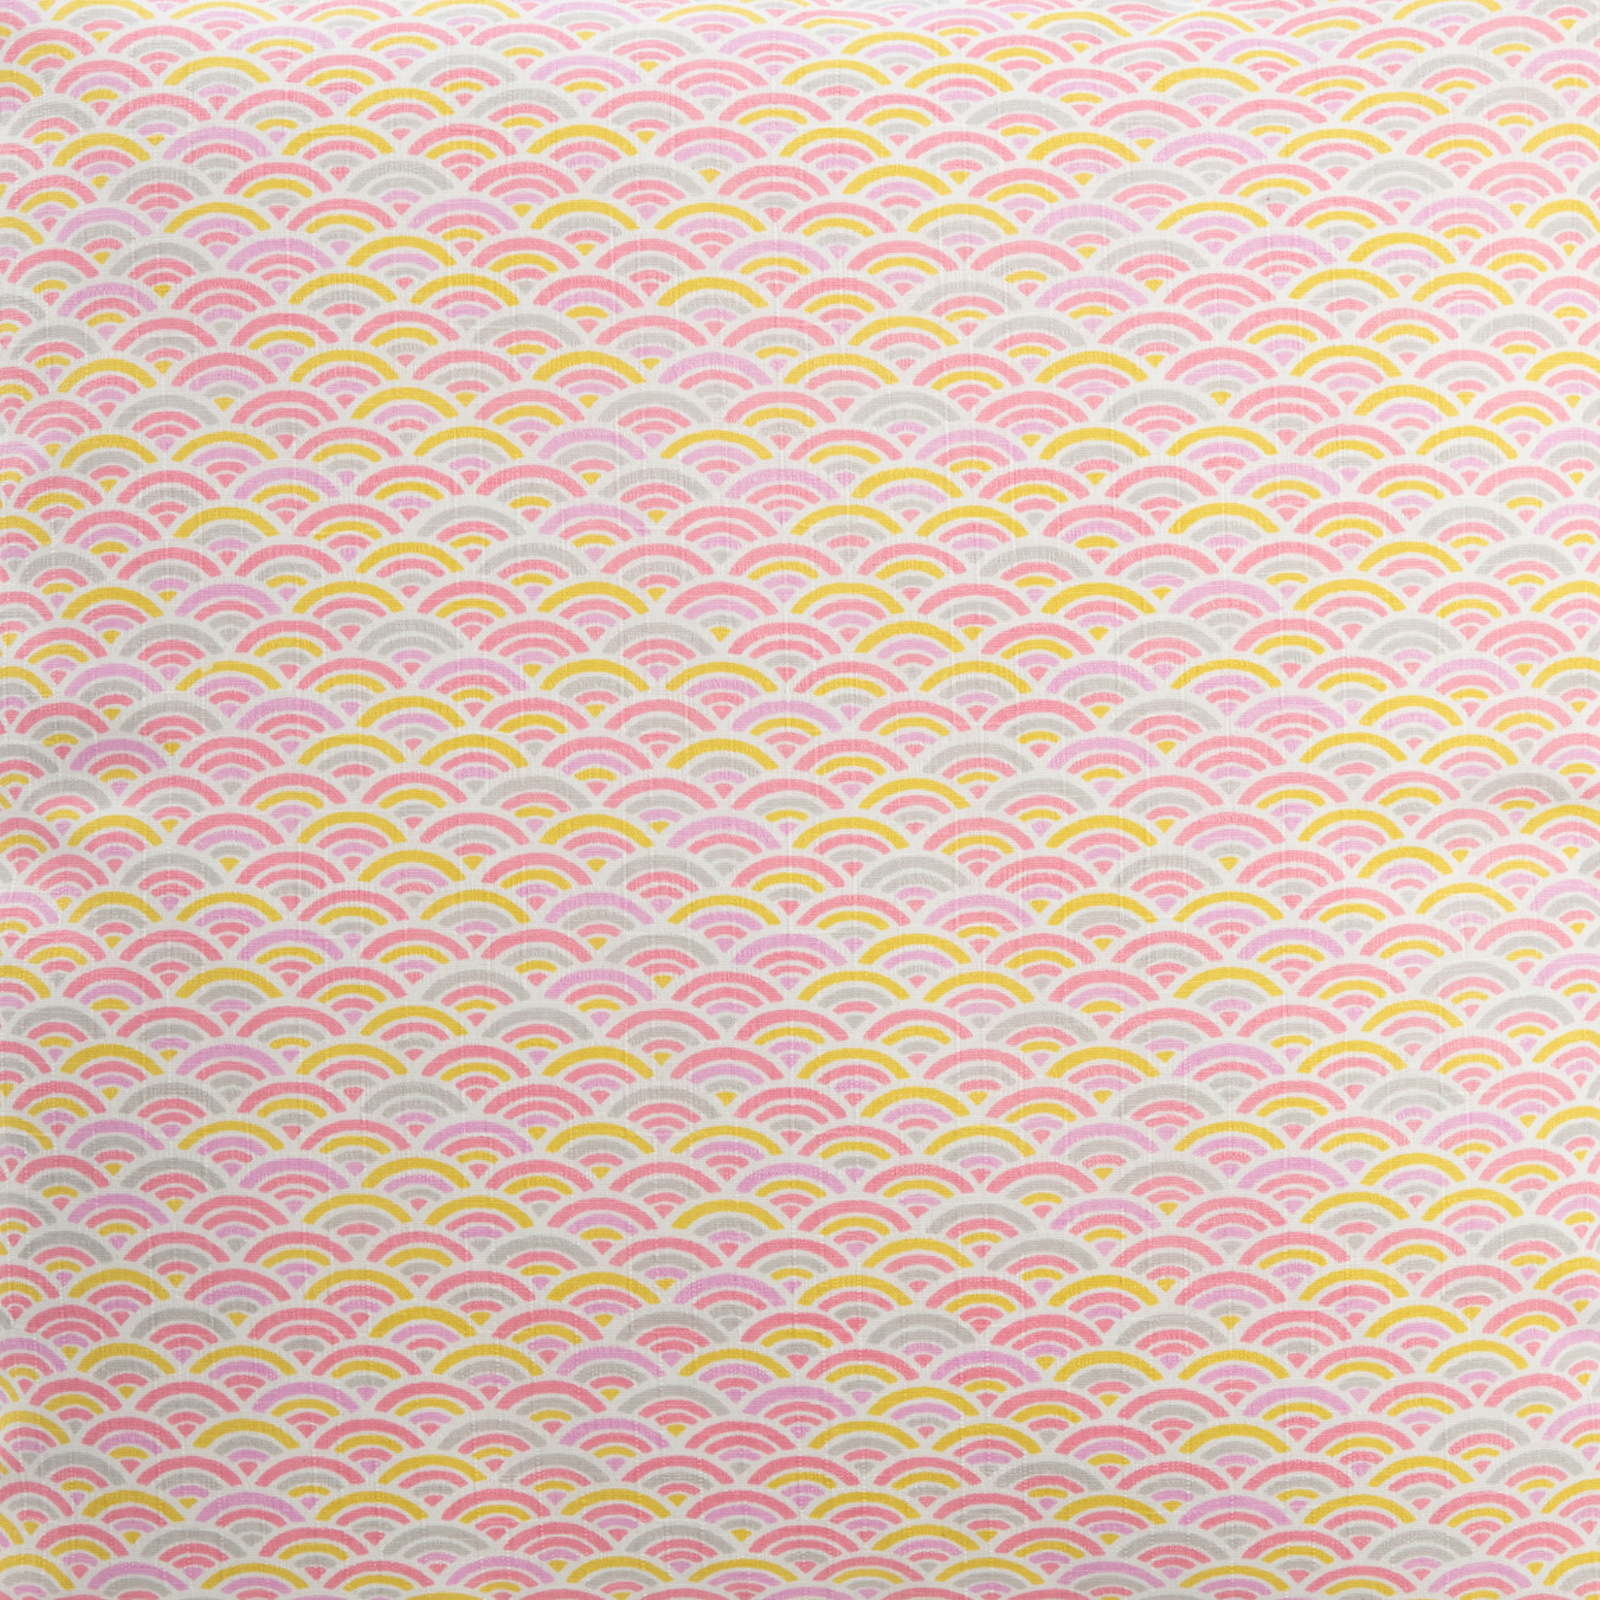 Imported Japanese Fabric - Colorful Seika Ha Pink_Fabric_Imported from Japan_100% Cotton_Japanese Sleep System